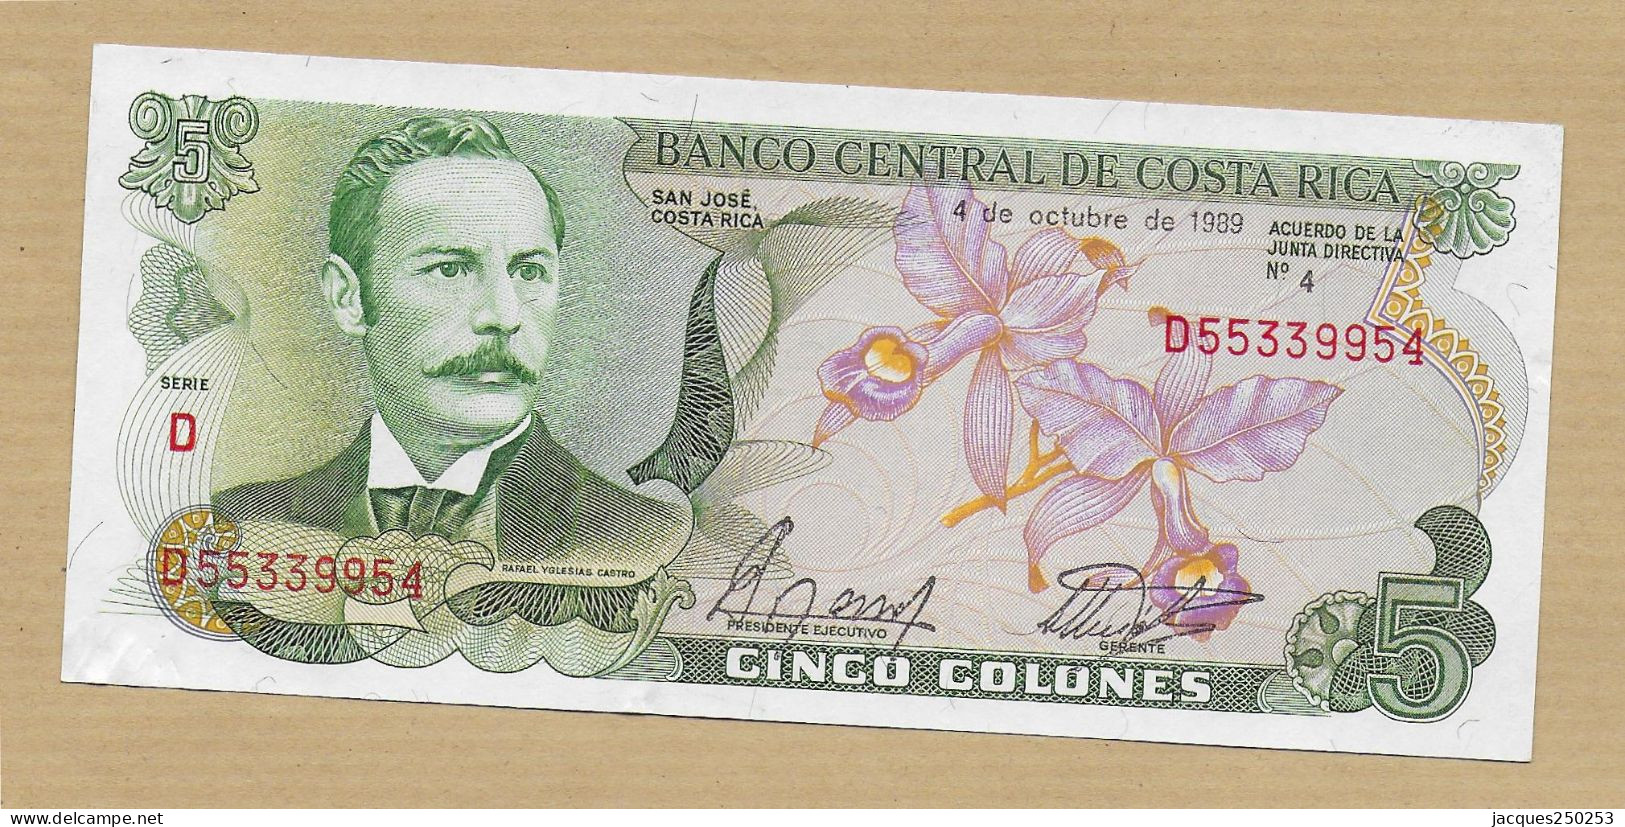 5 COLONES 4 OCTOBRE 1989 - Costa Rica